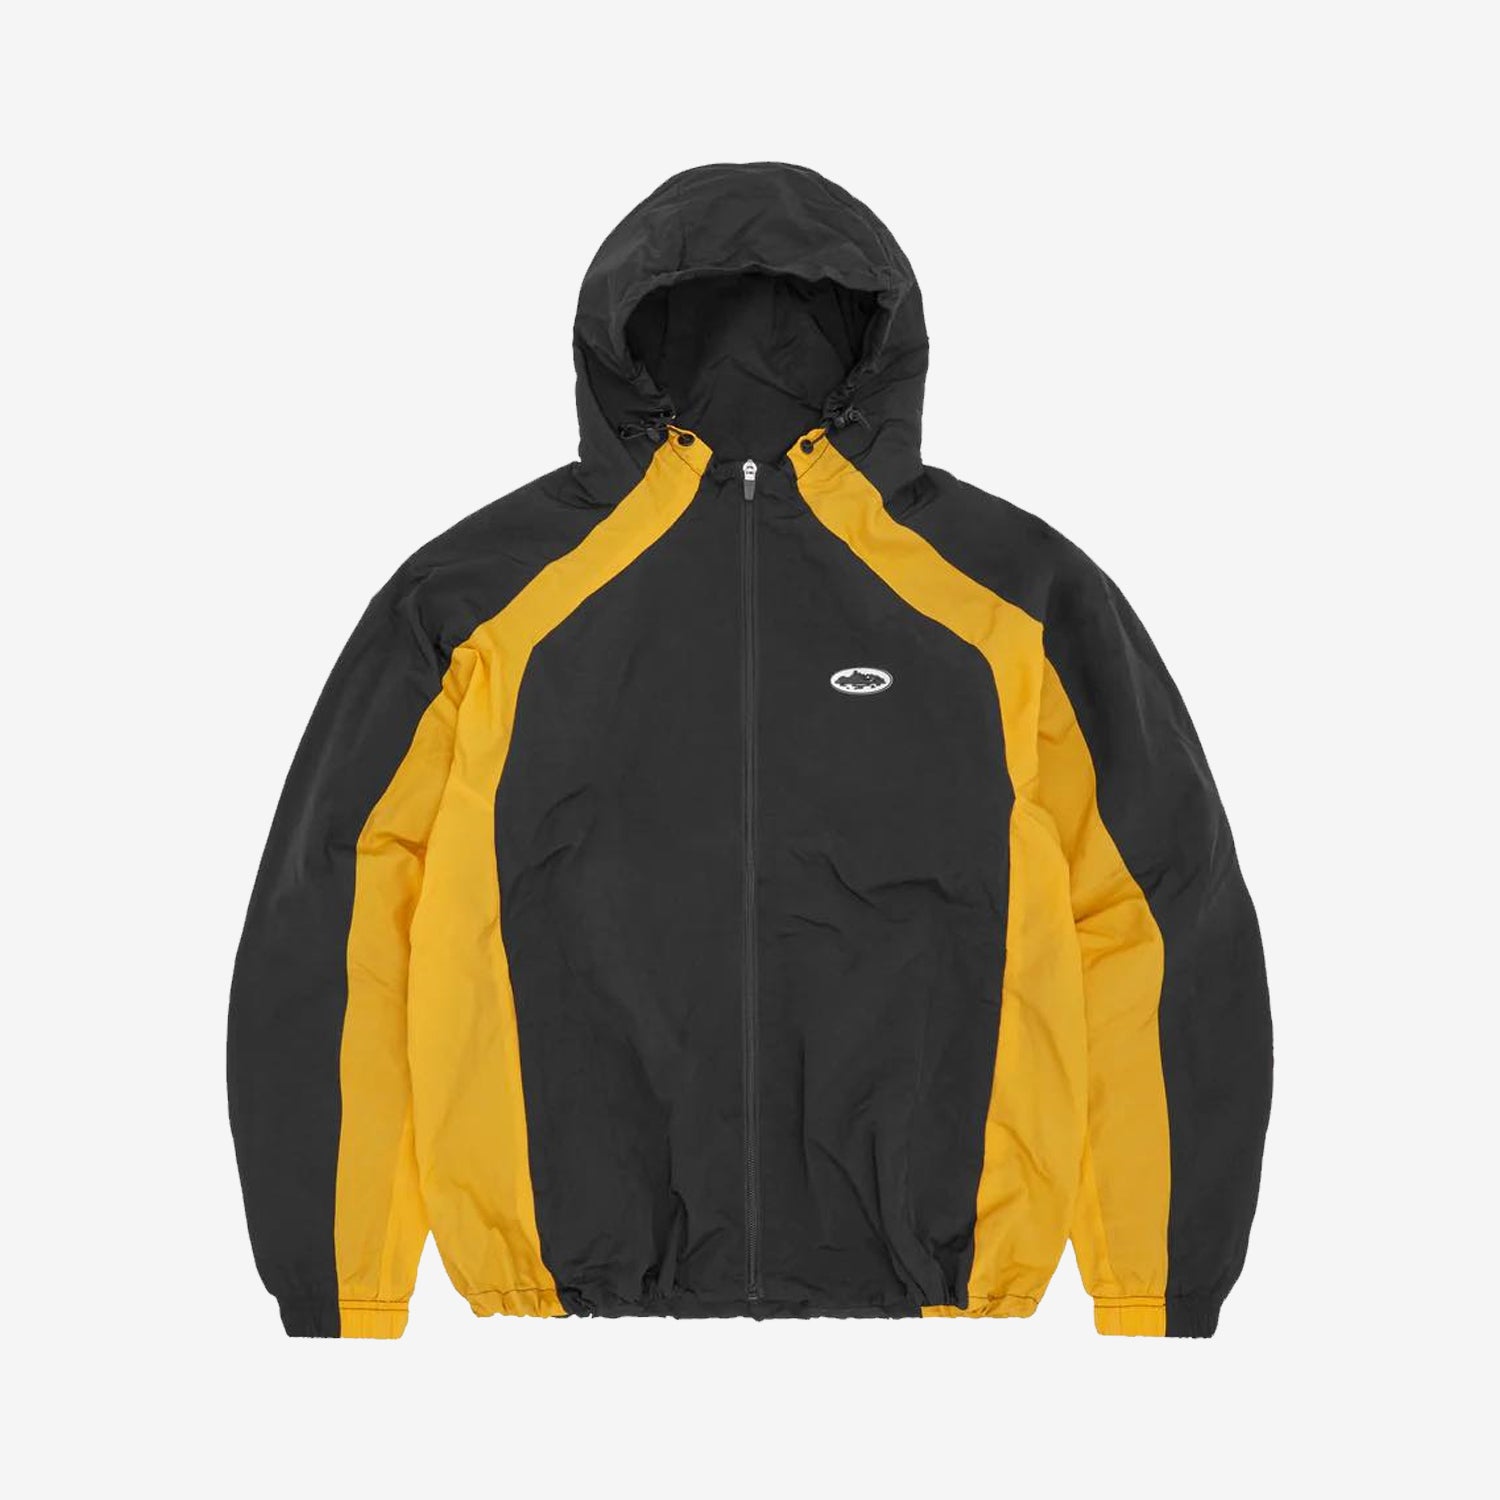 Corteiz RTW Spring Jacket - Black / Yellow